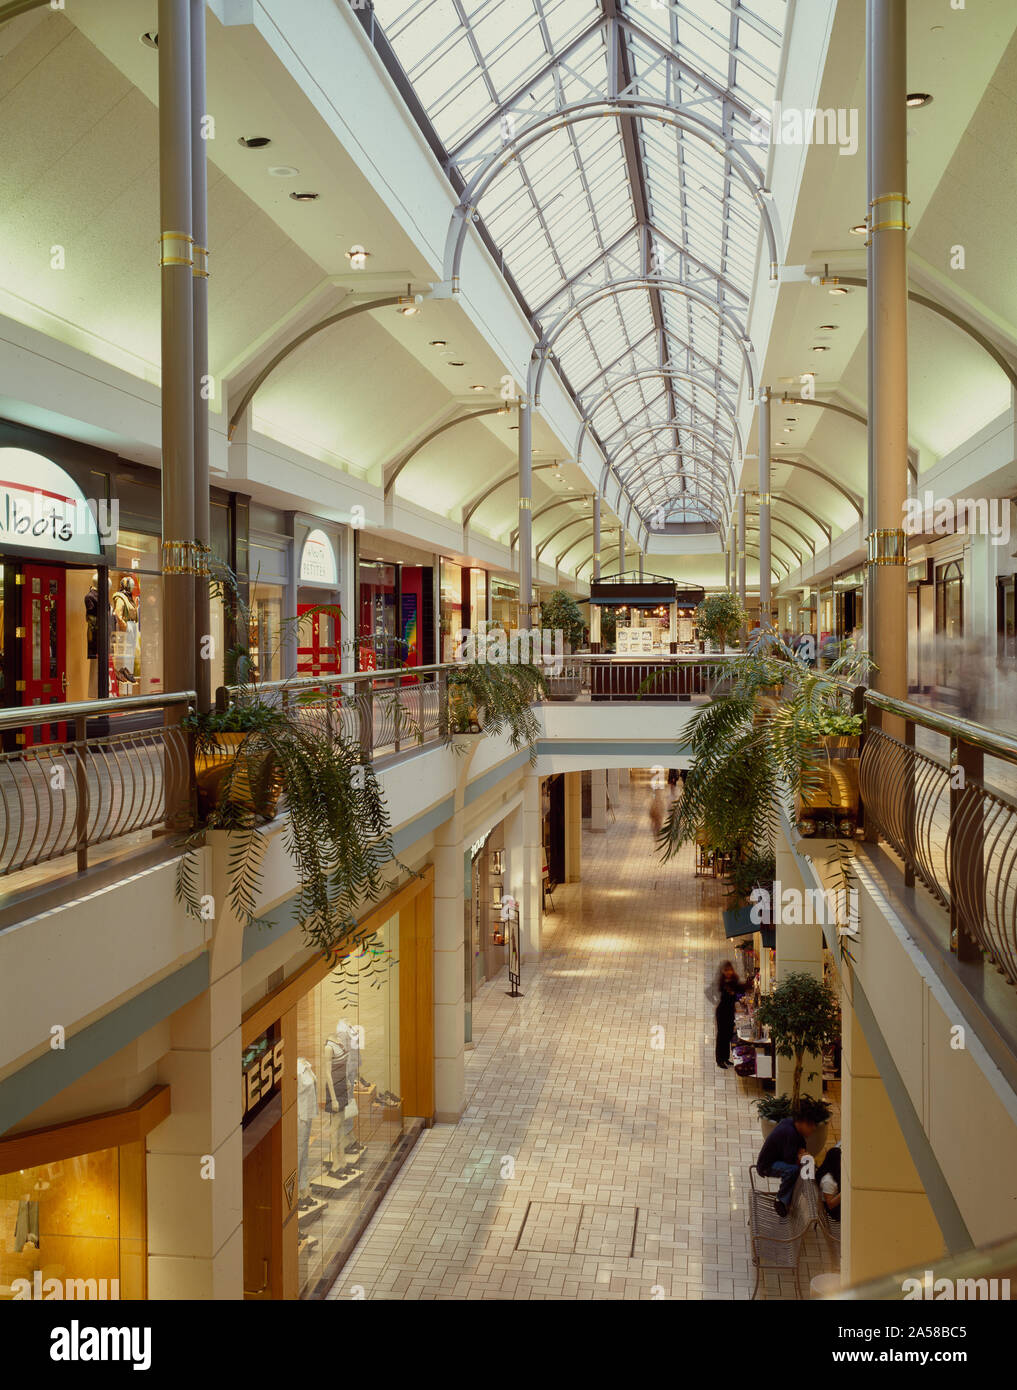 Shopping Mall in McLean, VA